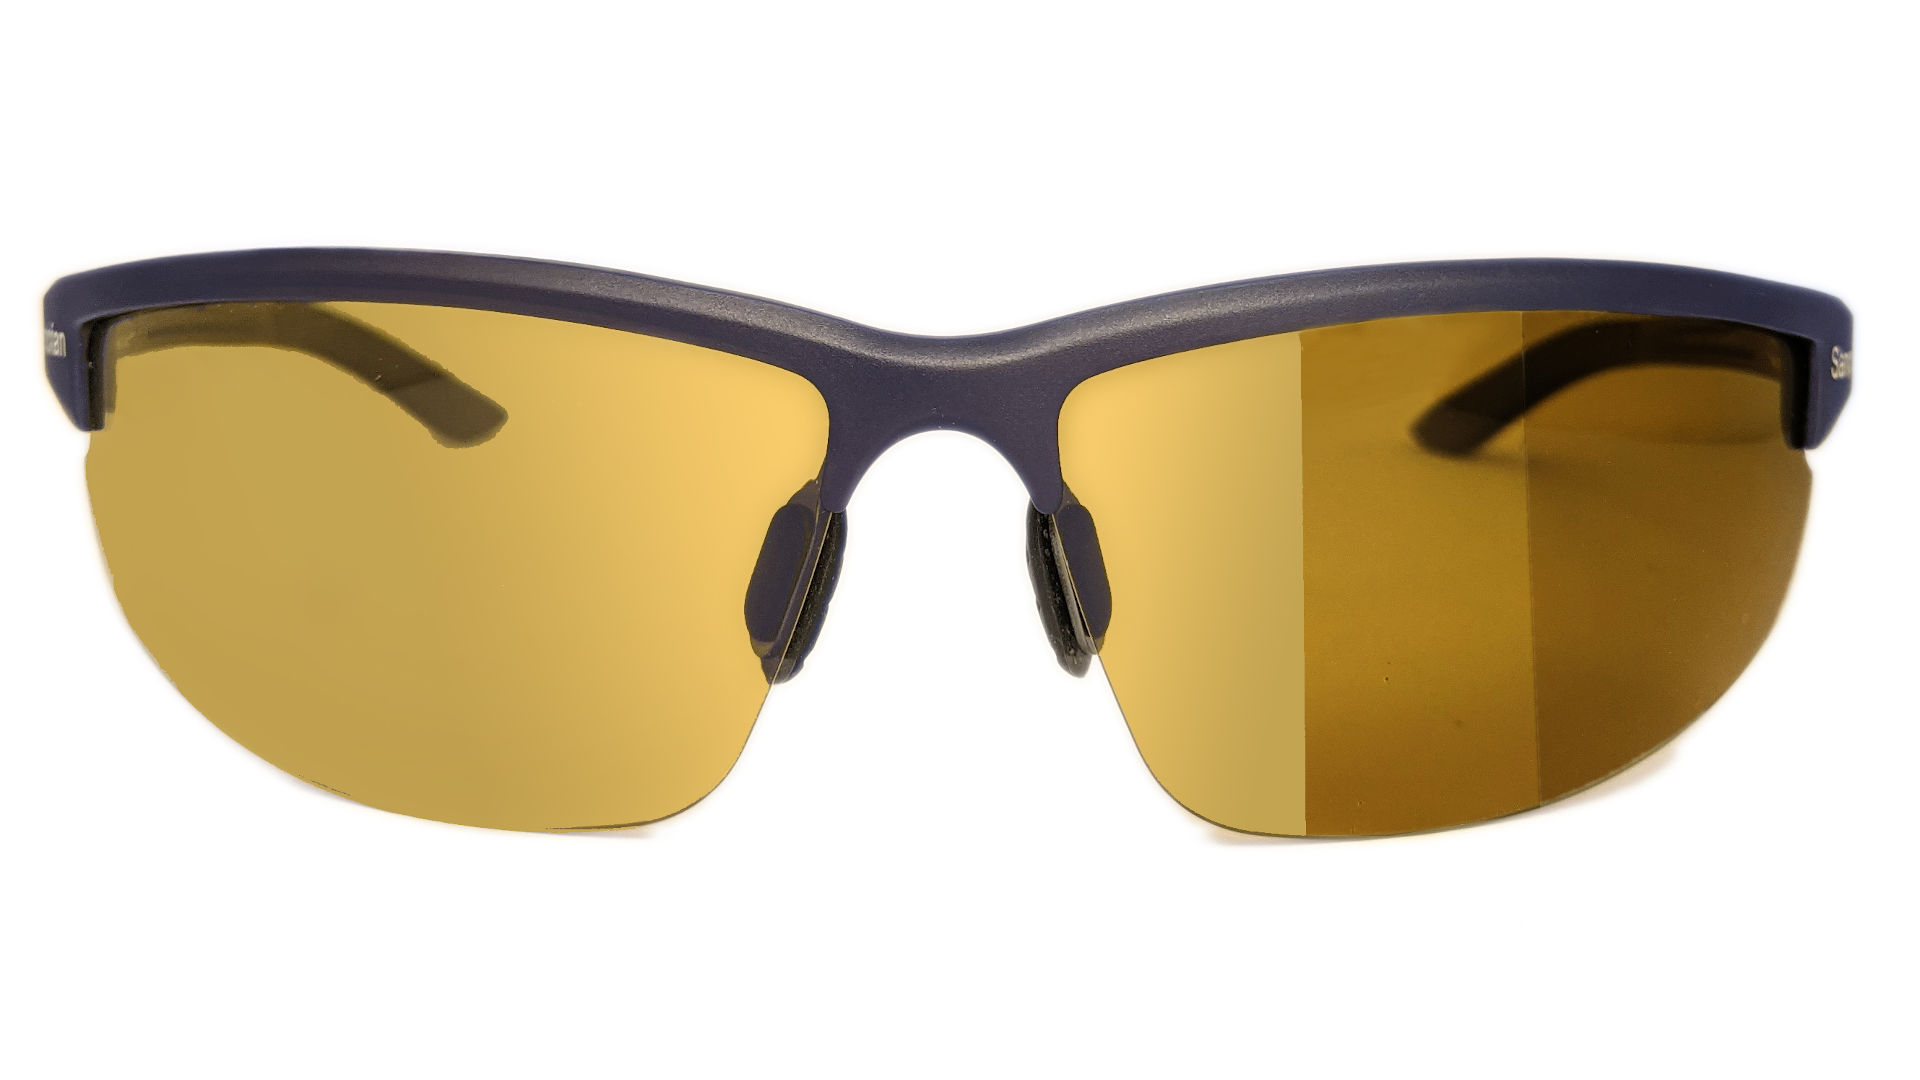 Polarized Sunglasses for Men - Sharpen Your Focus